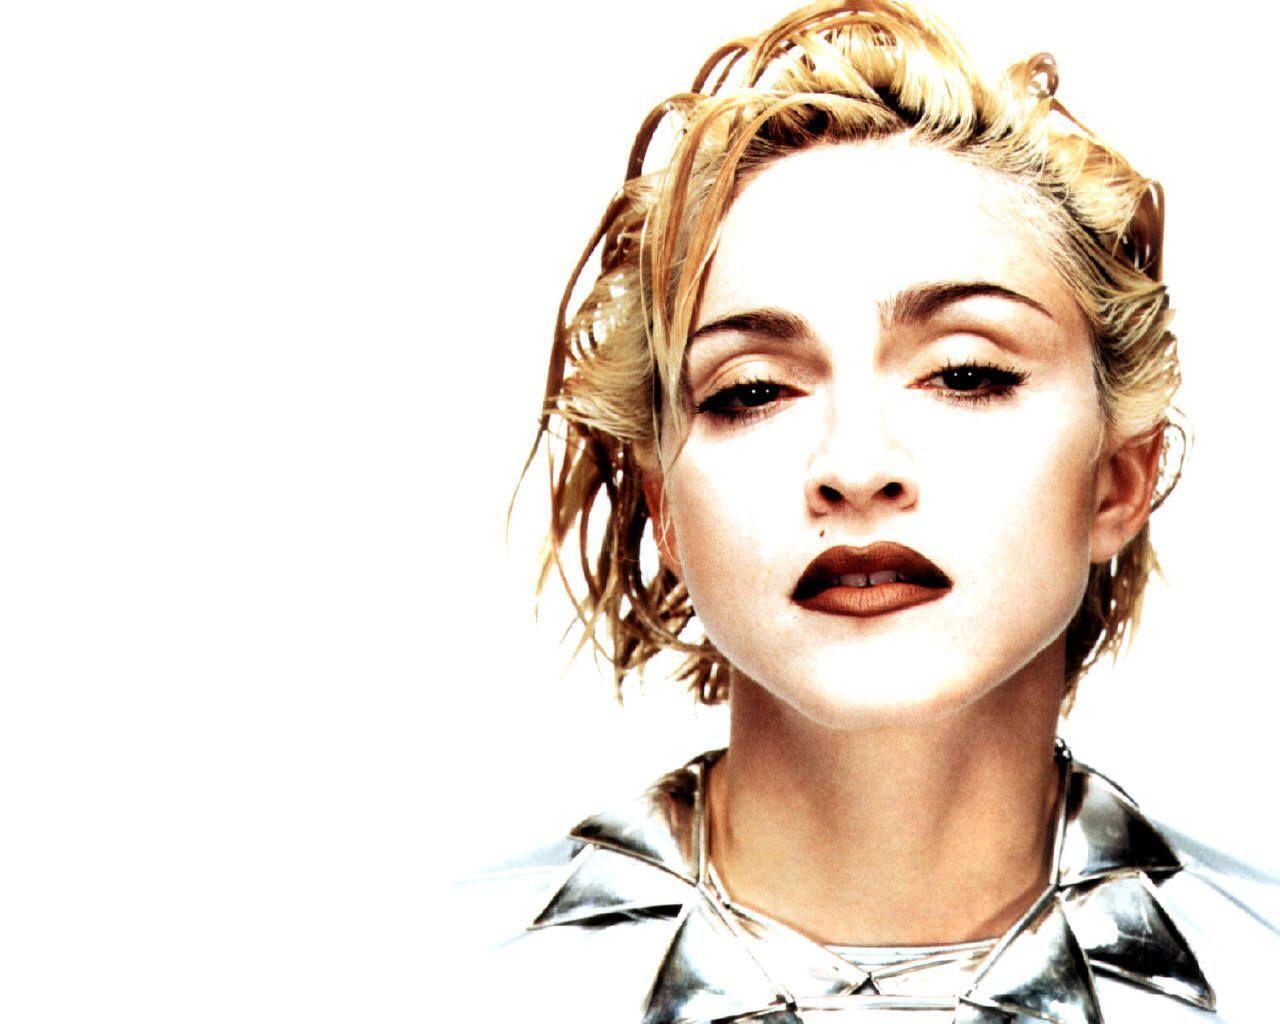 Madonna Wallpaper